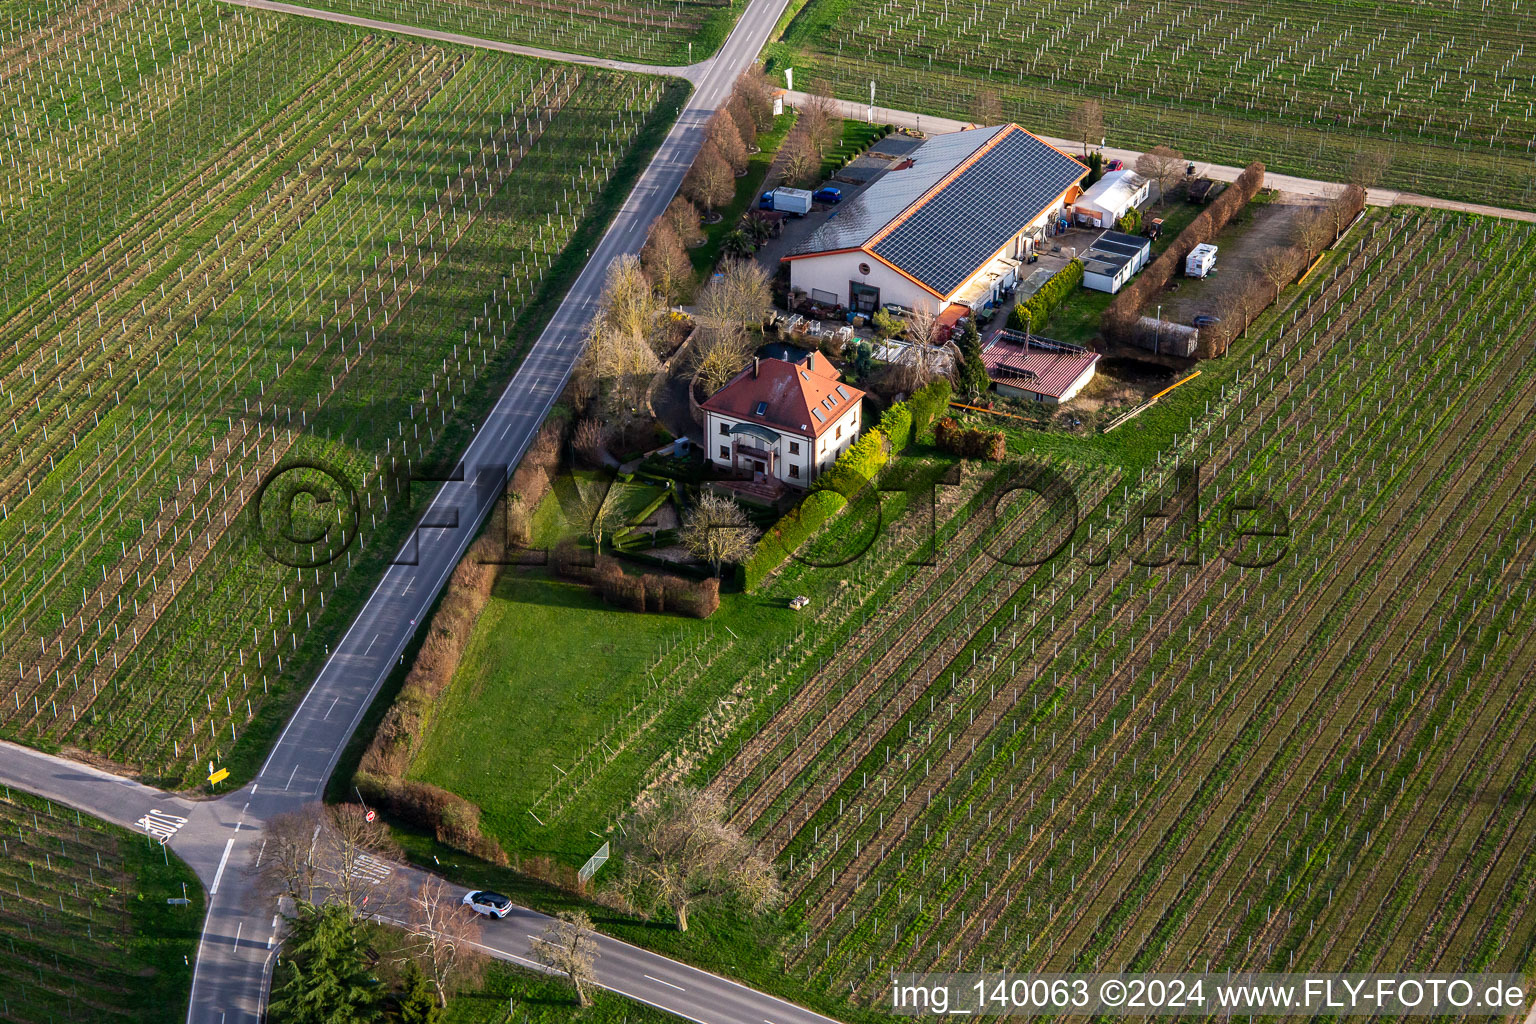 Villa Hochdörffer - winery & guest house in the district Nußdorf in Landau in der Pfalz in the state Rhineland-Palatinate, Germany